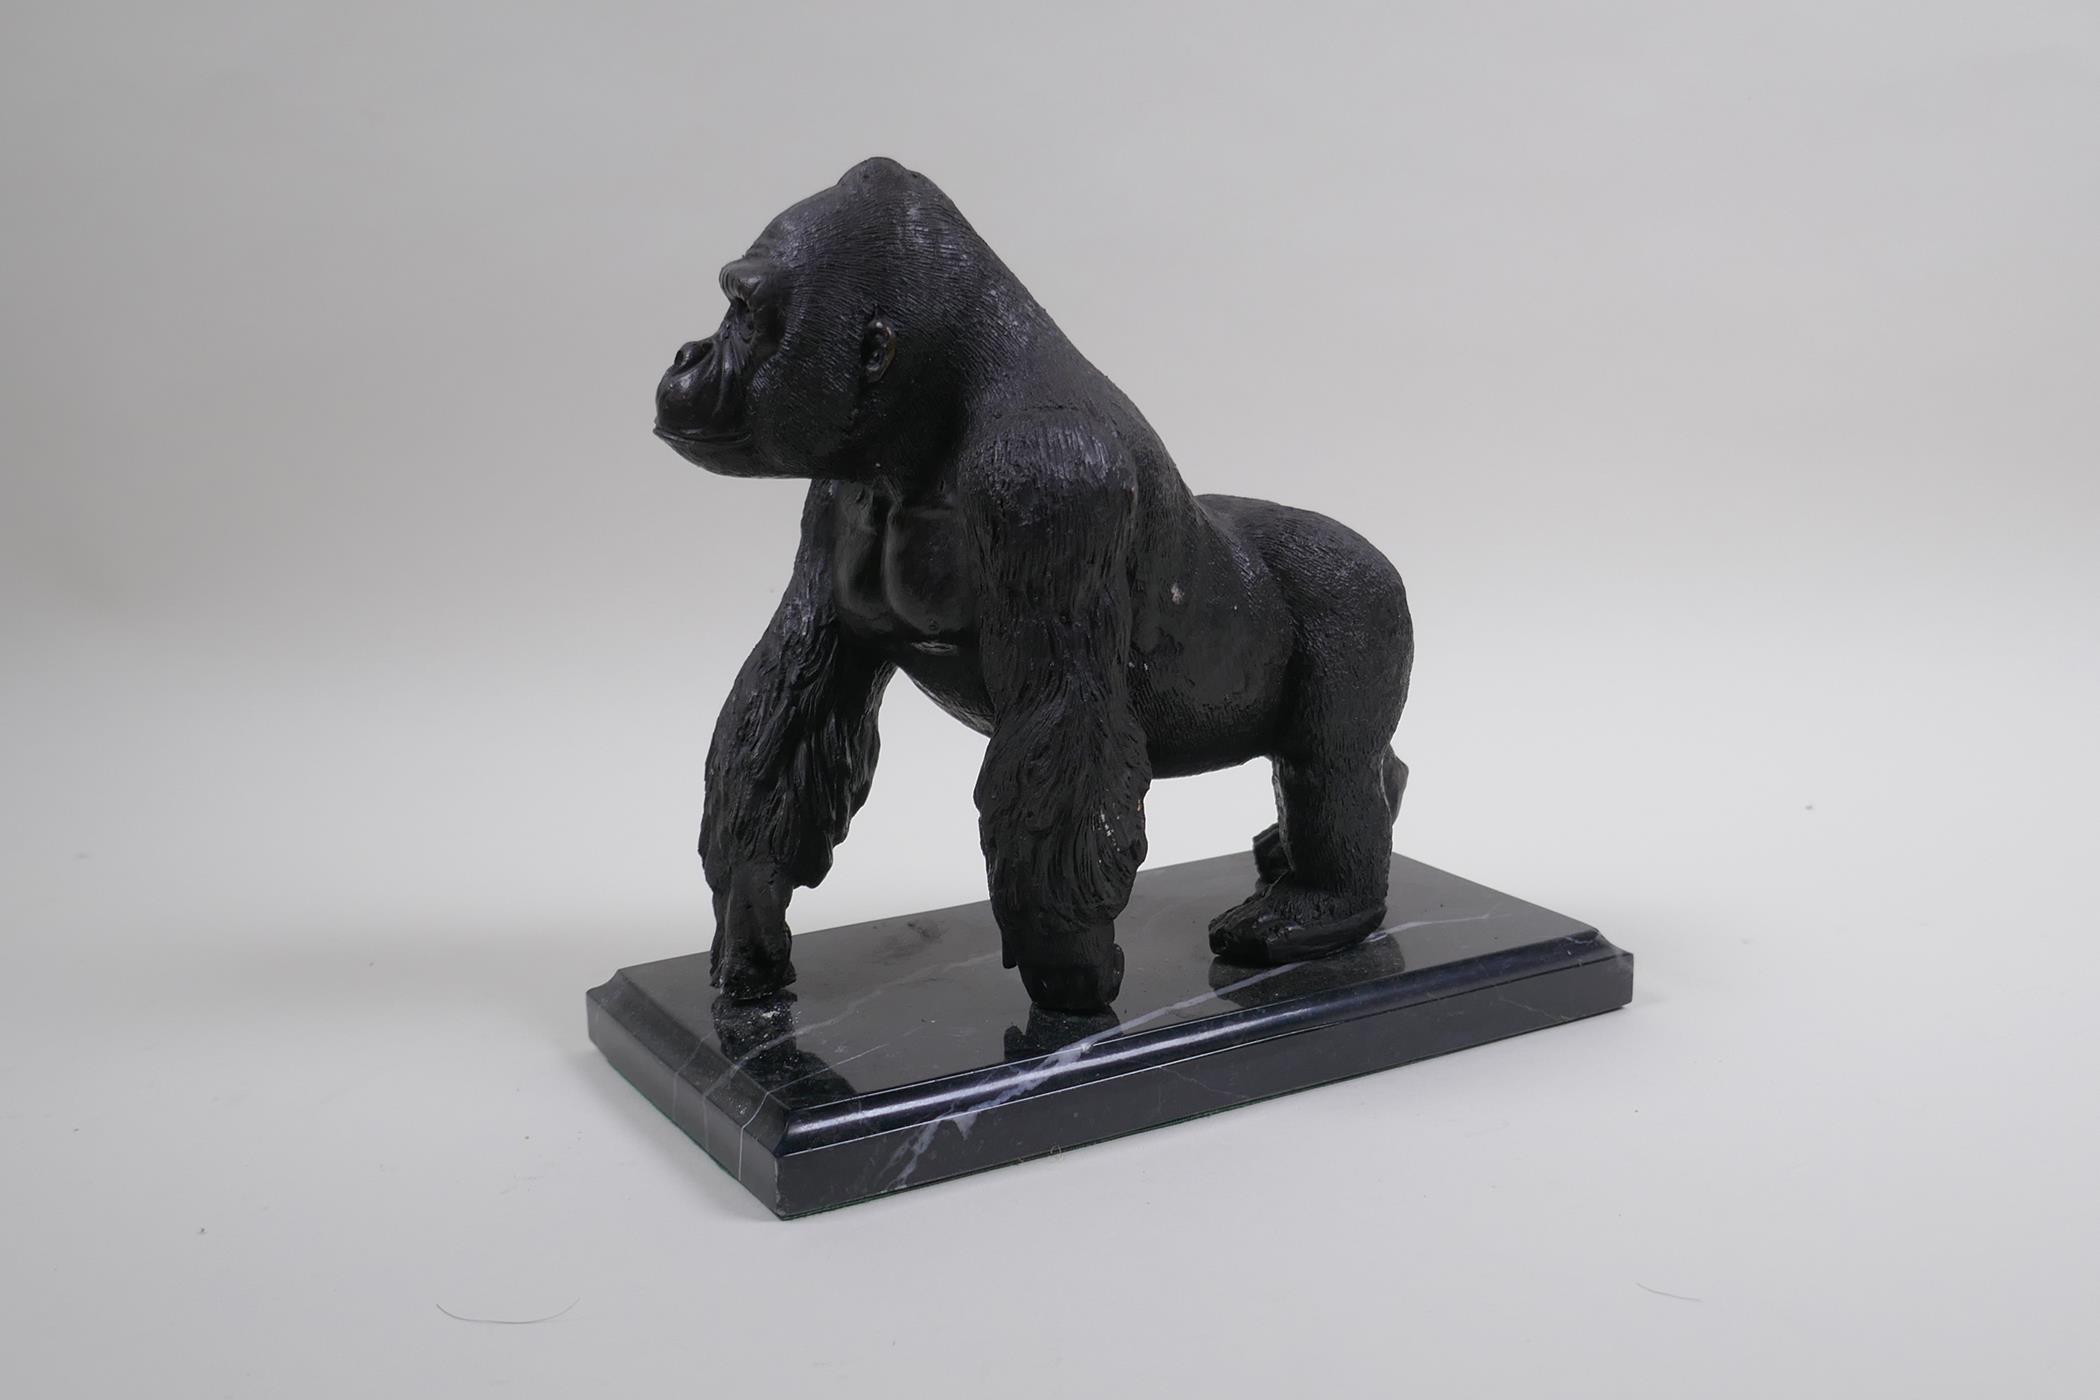 A cast bronze figure of a prowling gorilla, 18cm high